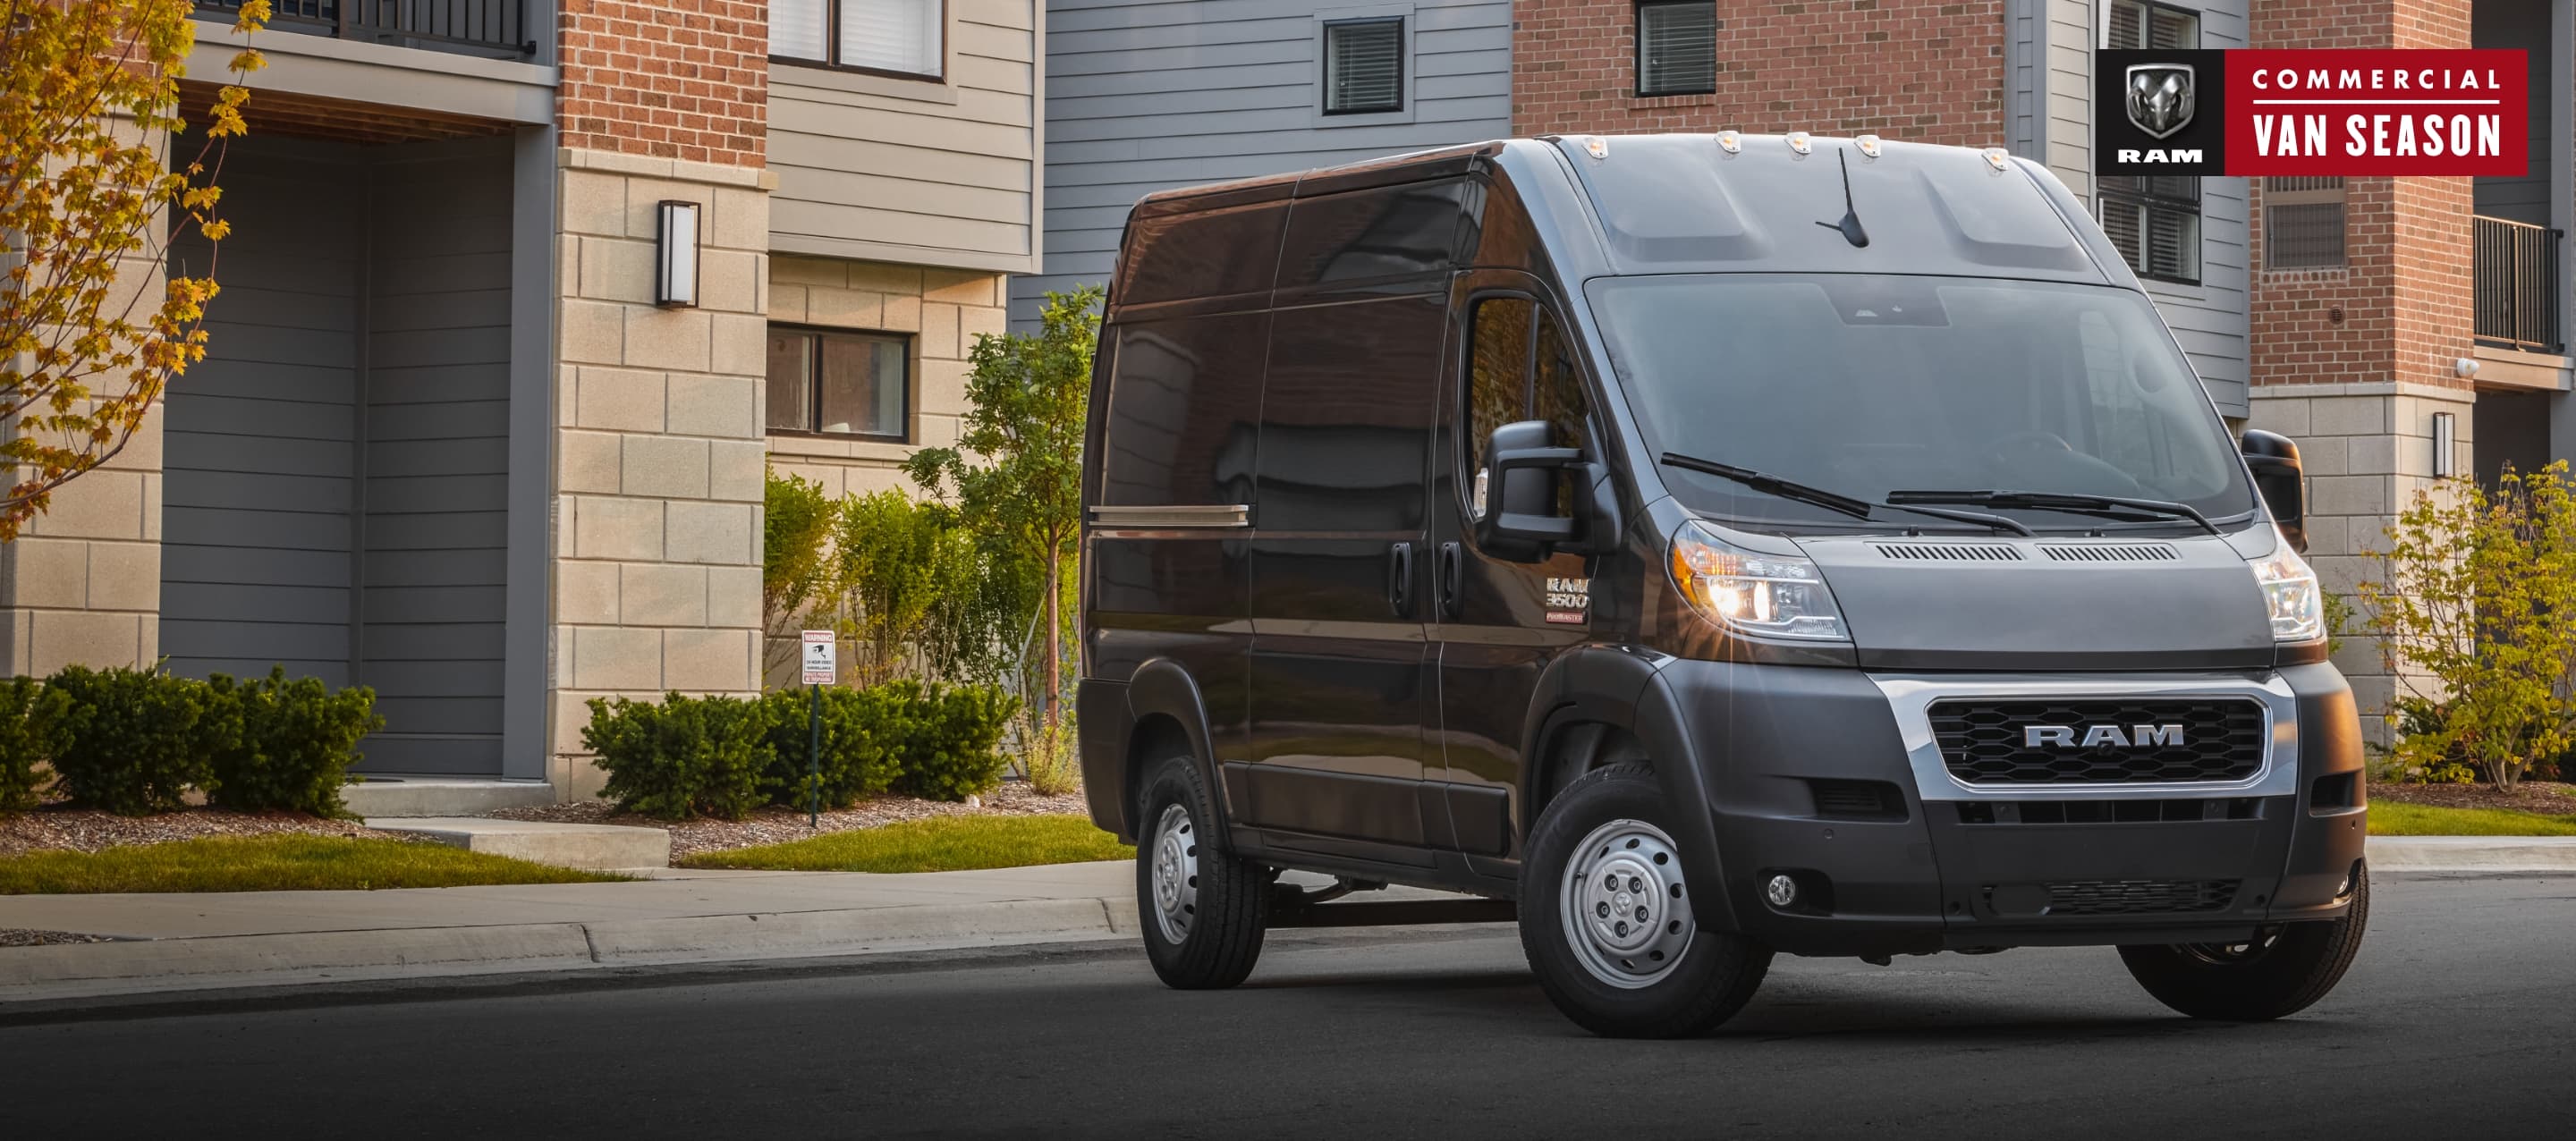 Ram Commercial Van Season. The 2022 Ram ProMaster 3500 Cargo Van parked on a residential street.